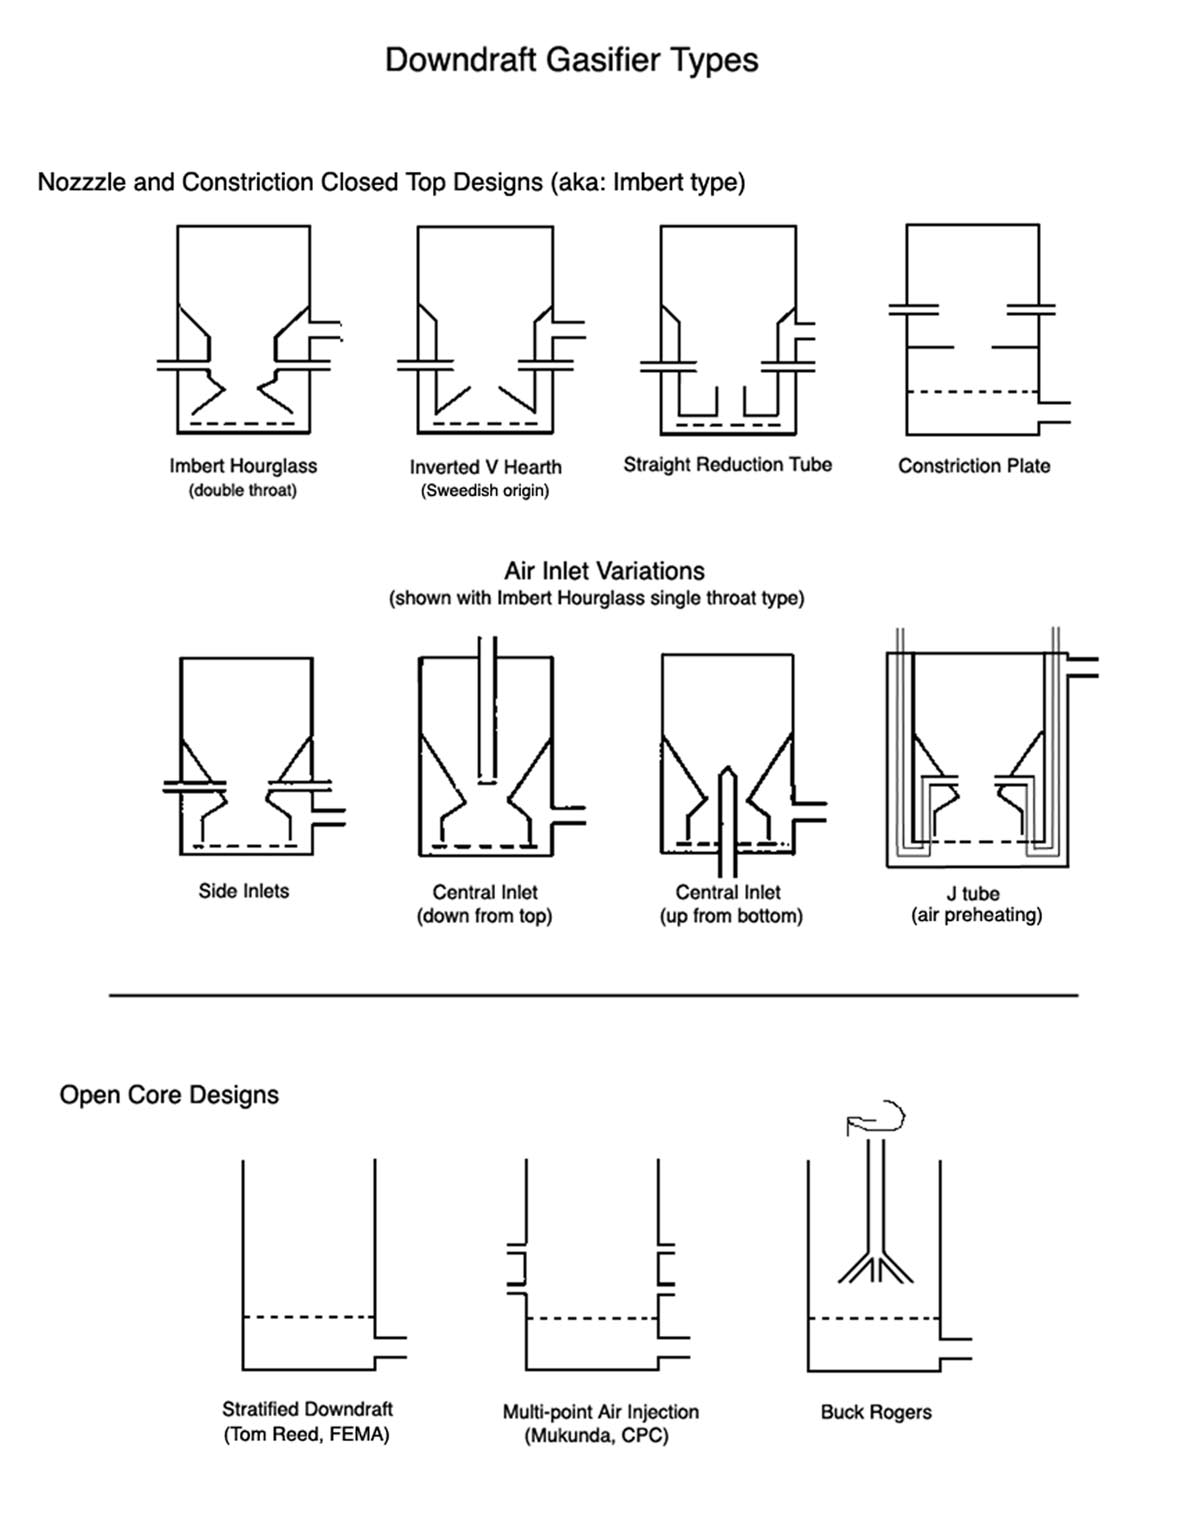 Different downdraft gasifier designs.